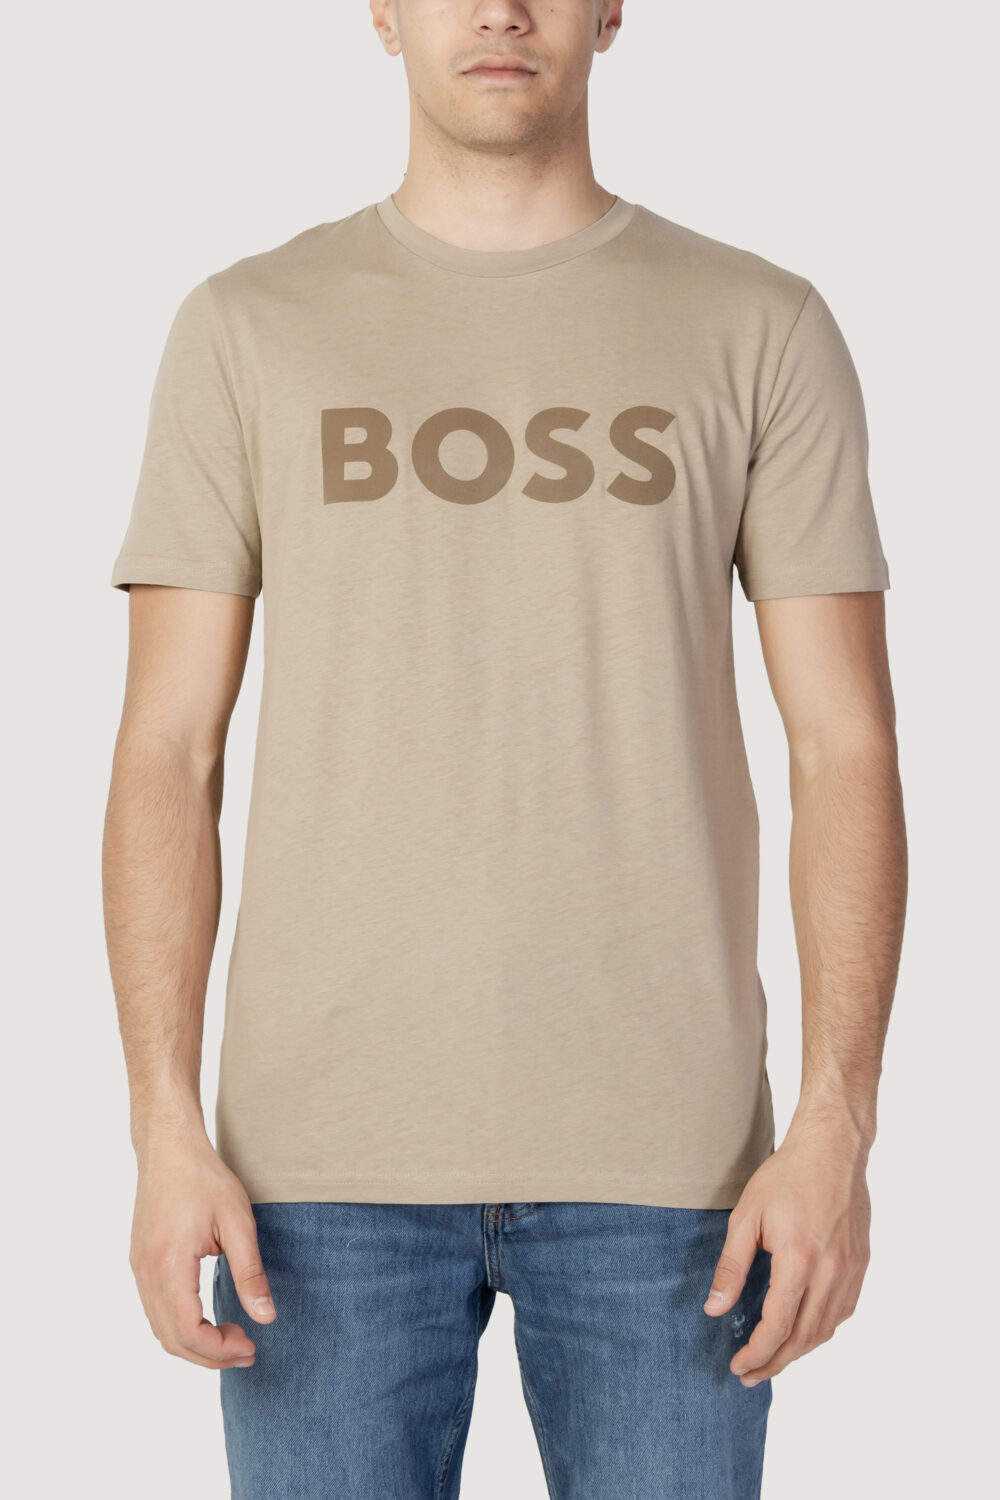 T-shirt Boss jersey thinking 1 Beige scuro - Foto 5